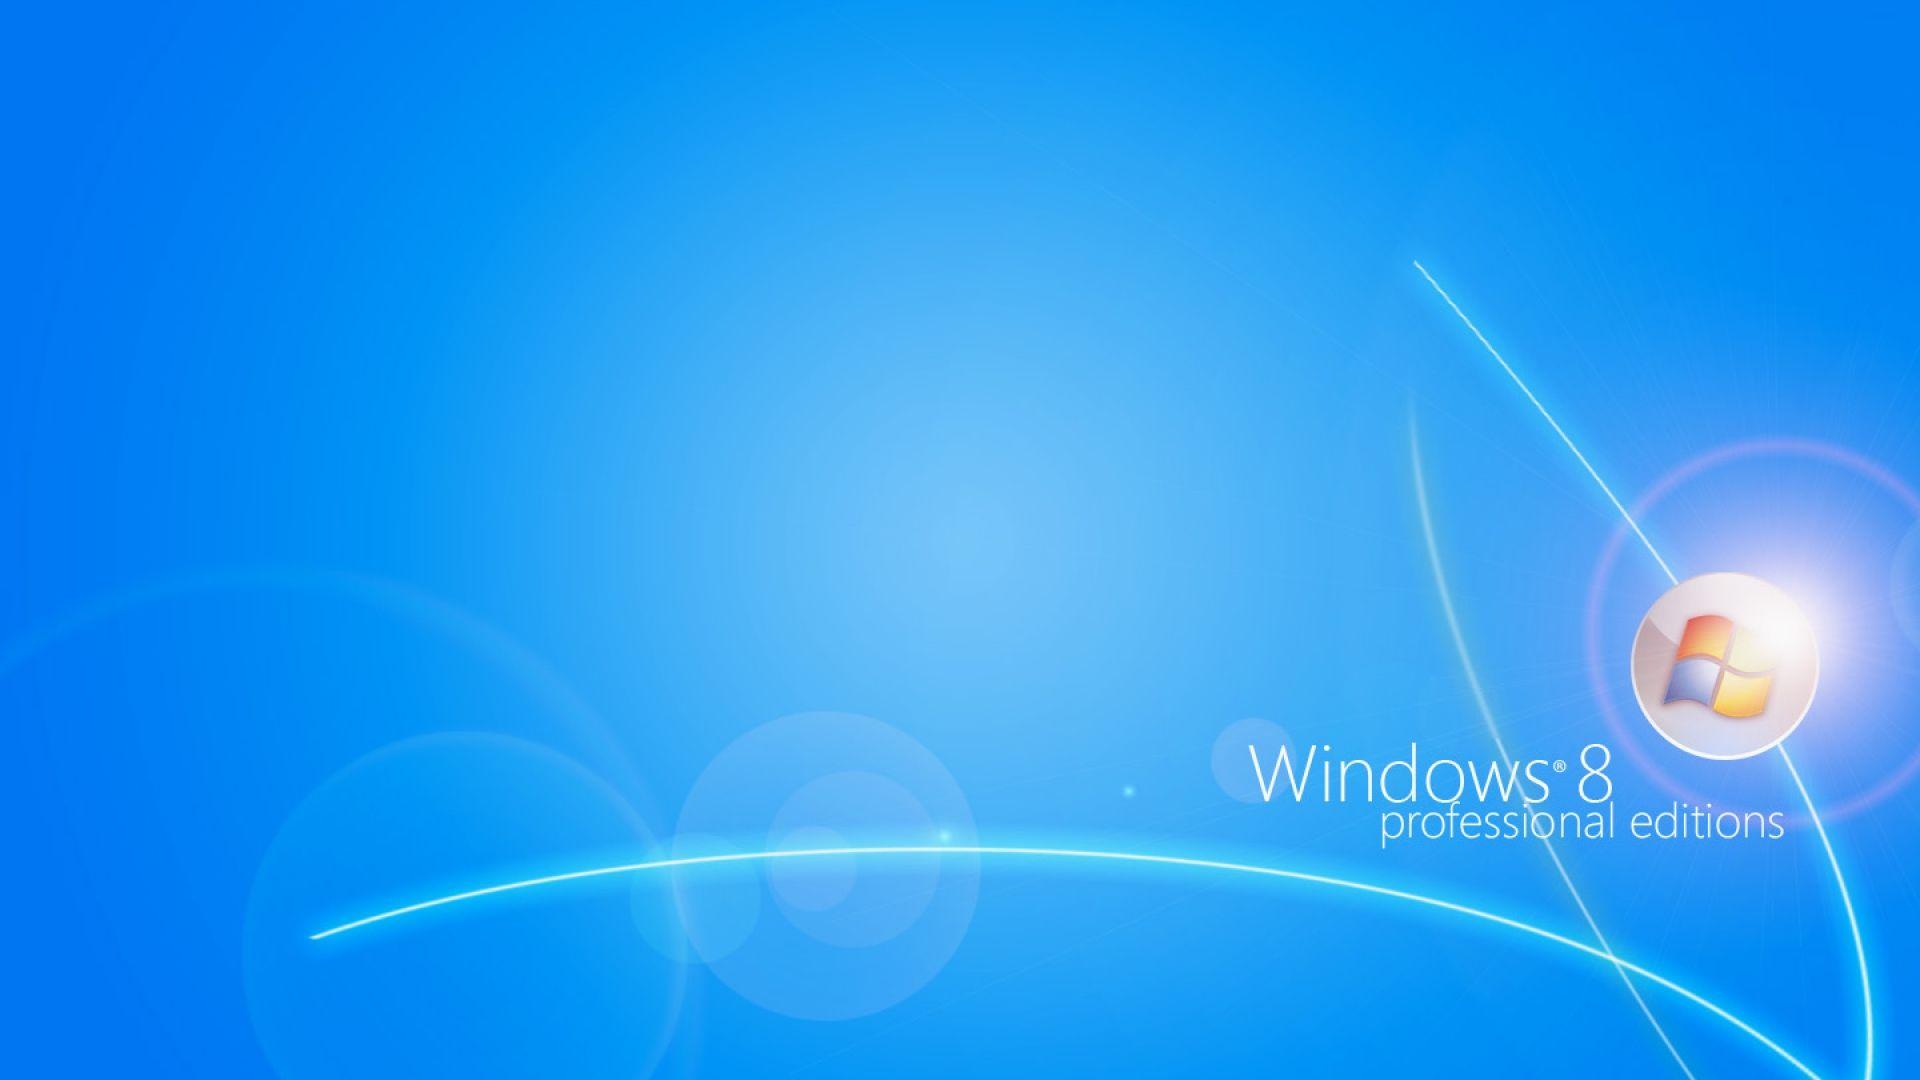 Best Windows HD wallpaper mytechshout Windows Professional HD